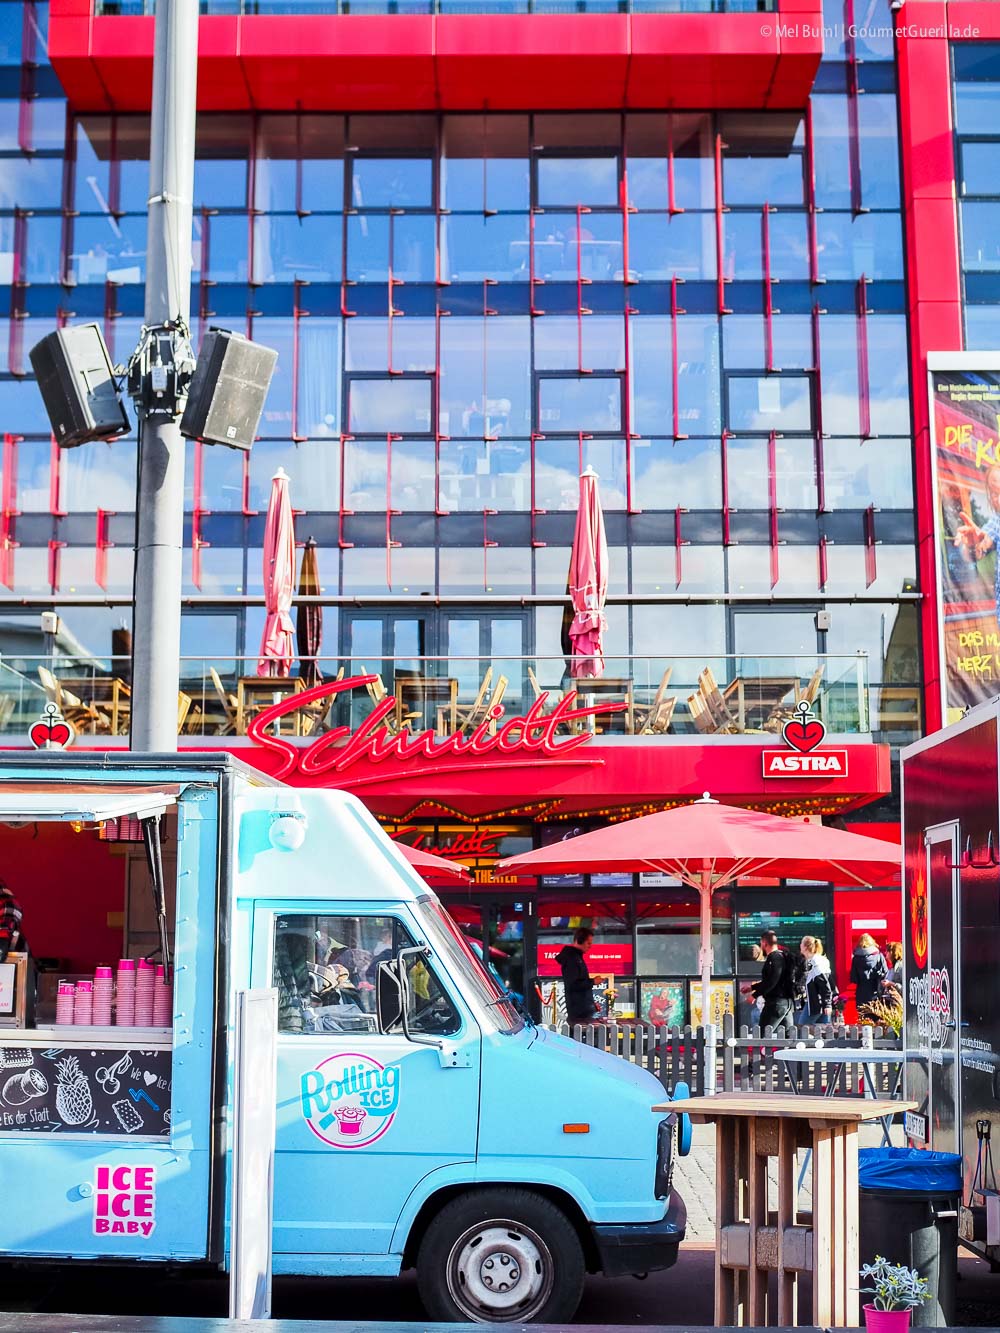 Weine Langudeoc Food Truck Festival Hamburg | GourmetGuerilla.de